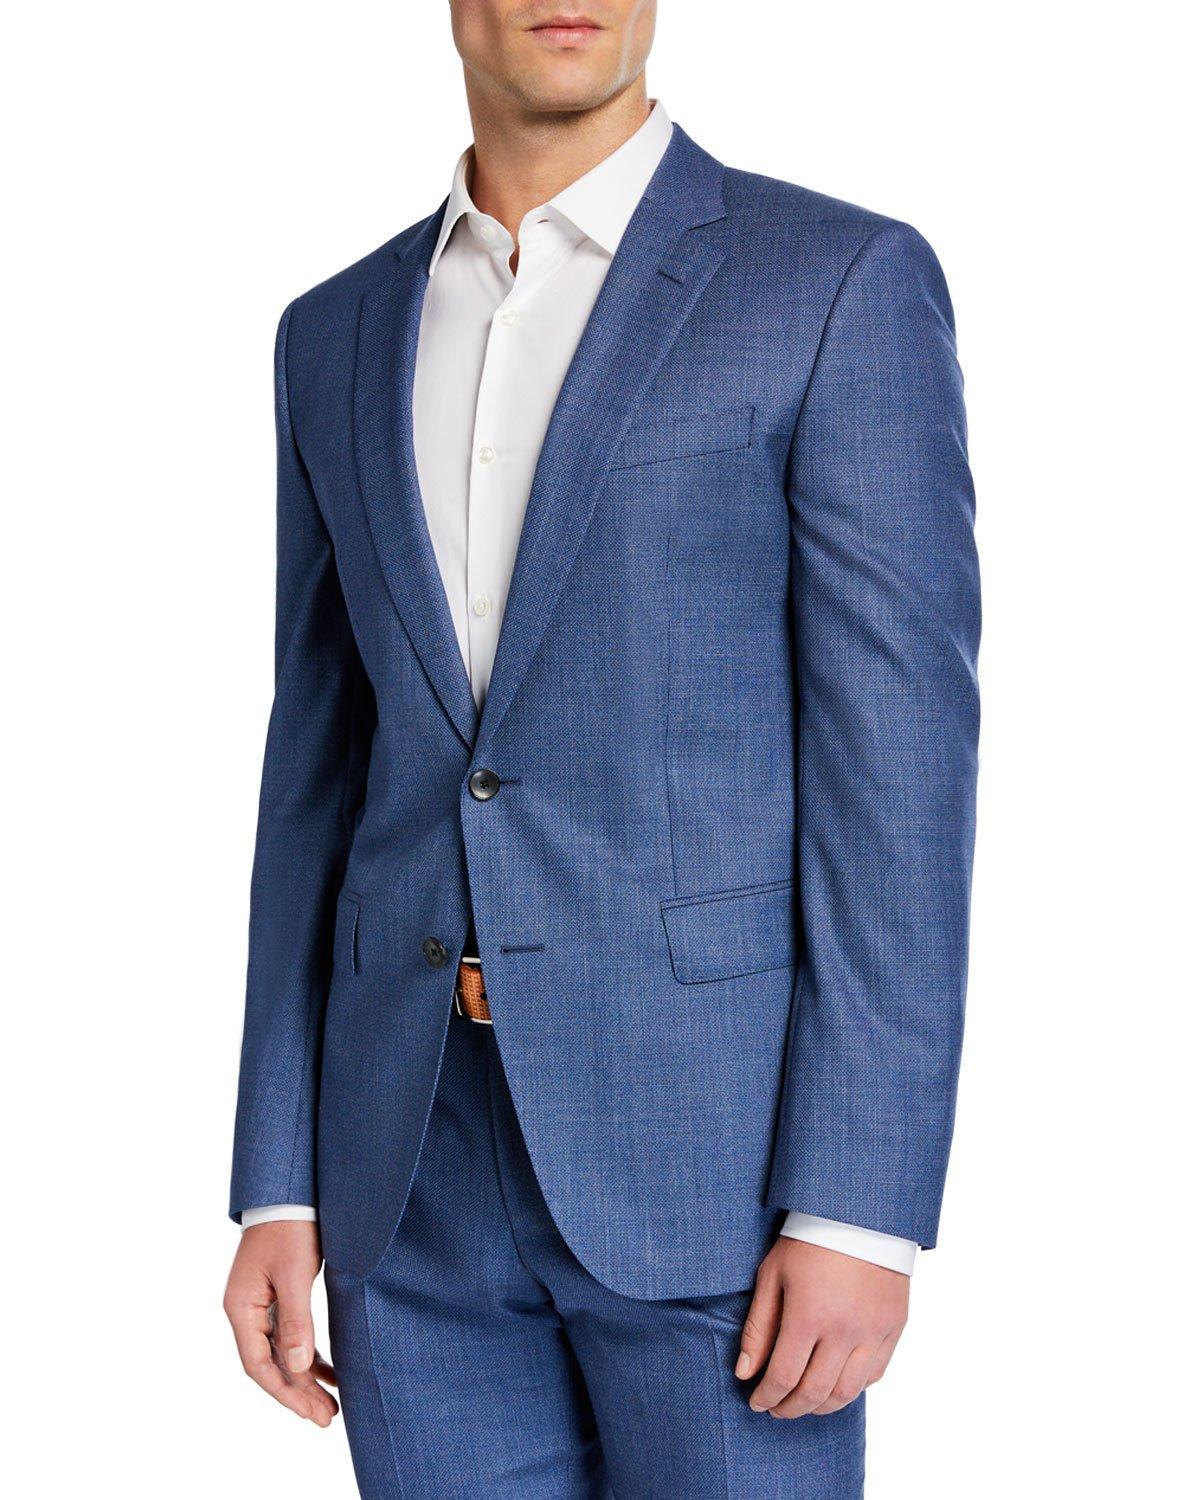 BOSS by Hugo Boss Two-piece Slim-fit Wool Suit in Blue for Men - Lyst